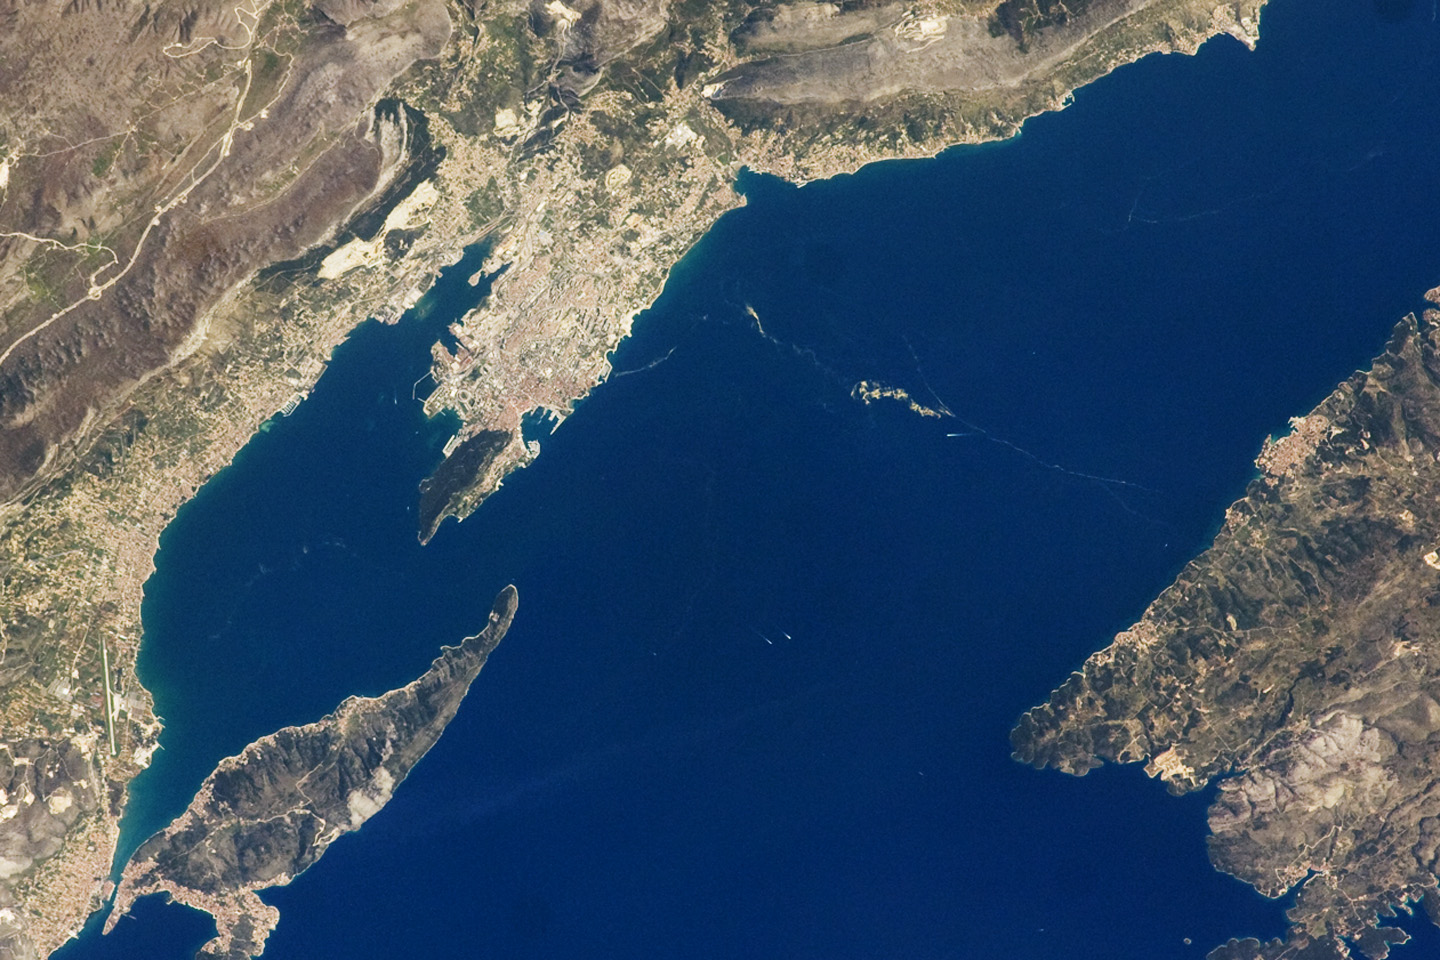 Dalmatian Coastline near Split, Croatia - related image preview